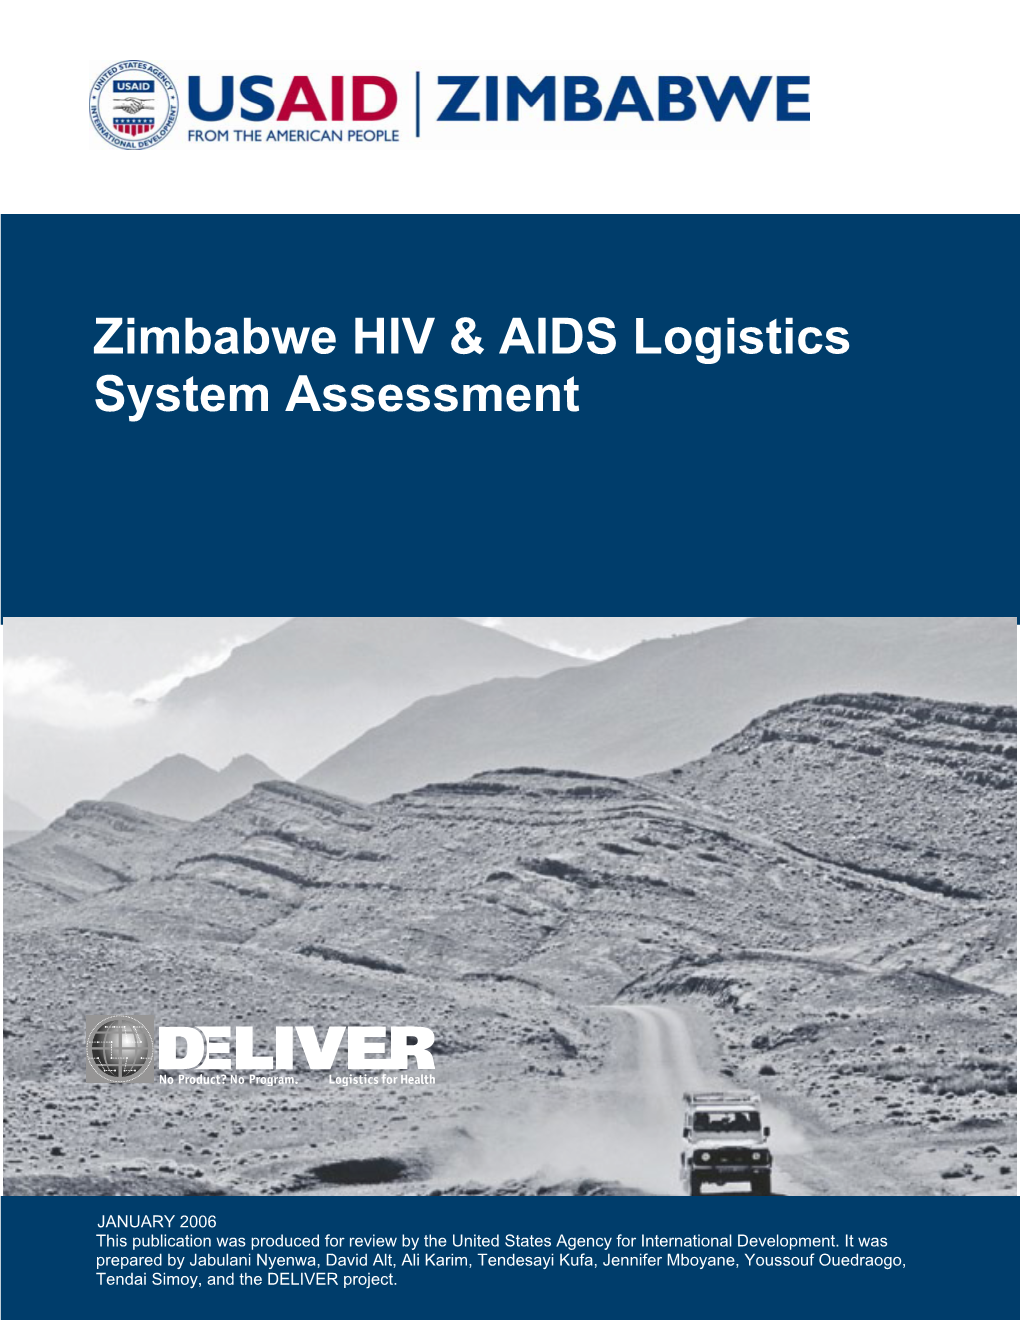 Zimbabwe HIV & AIDS Logistics System Assessment, Jan 2006